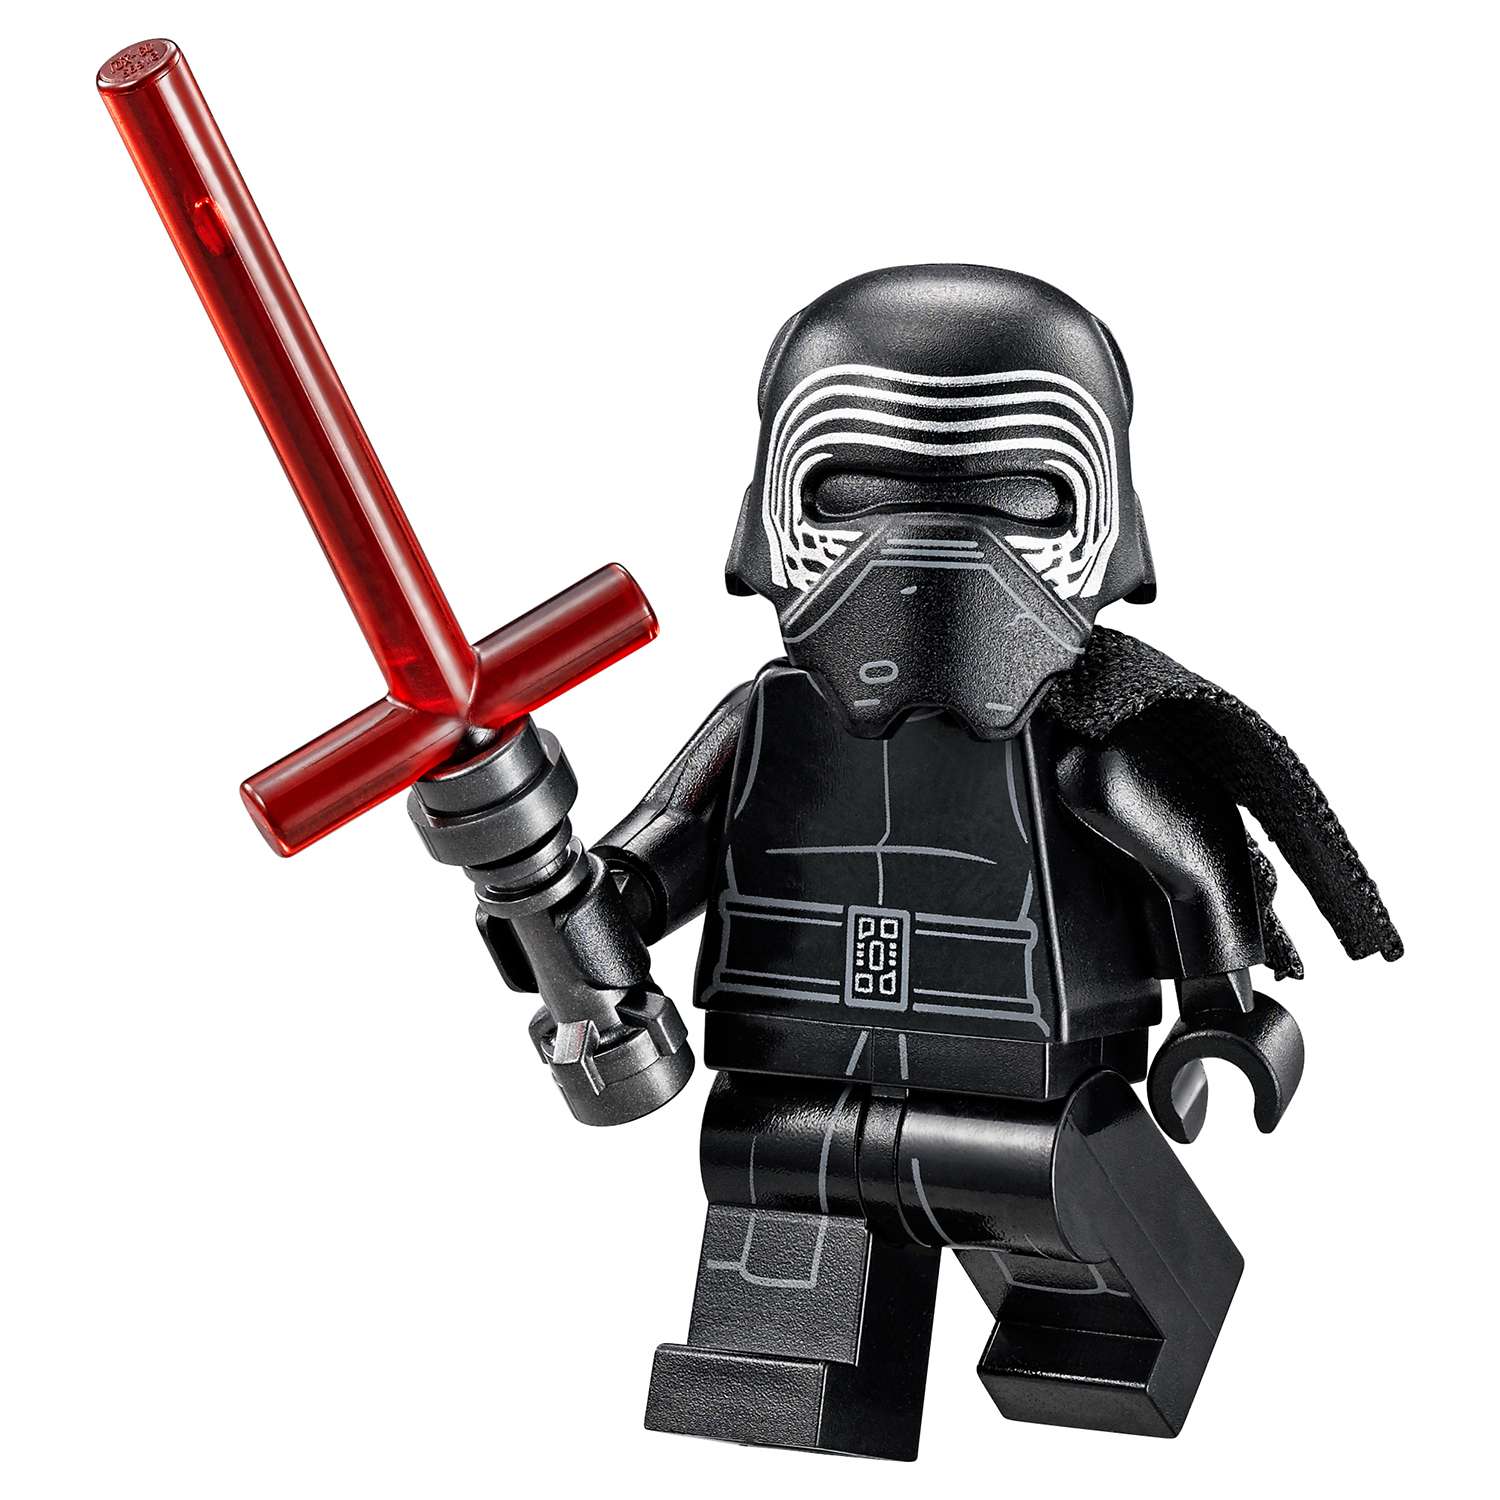 Конструктор LEGO Star Wars TM Командный шаттл Кайло Рена (Kylo Ren's Command Shuttle™) (75104) - фото 13